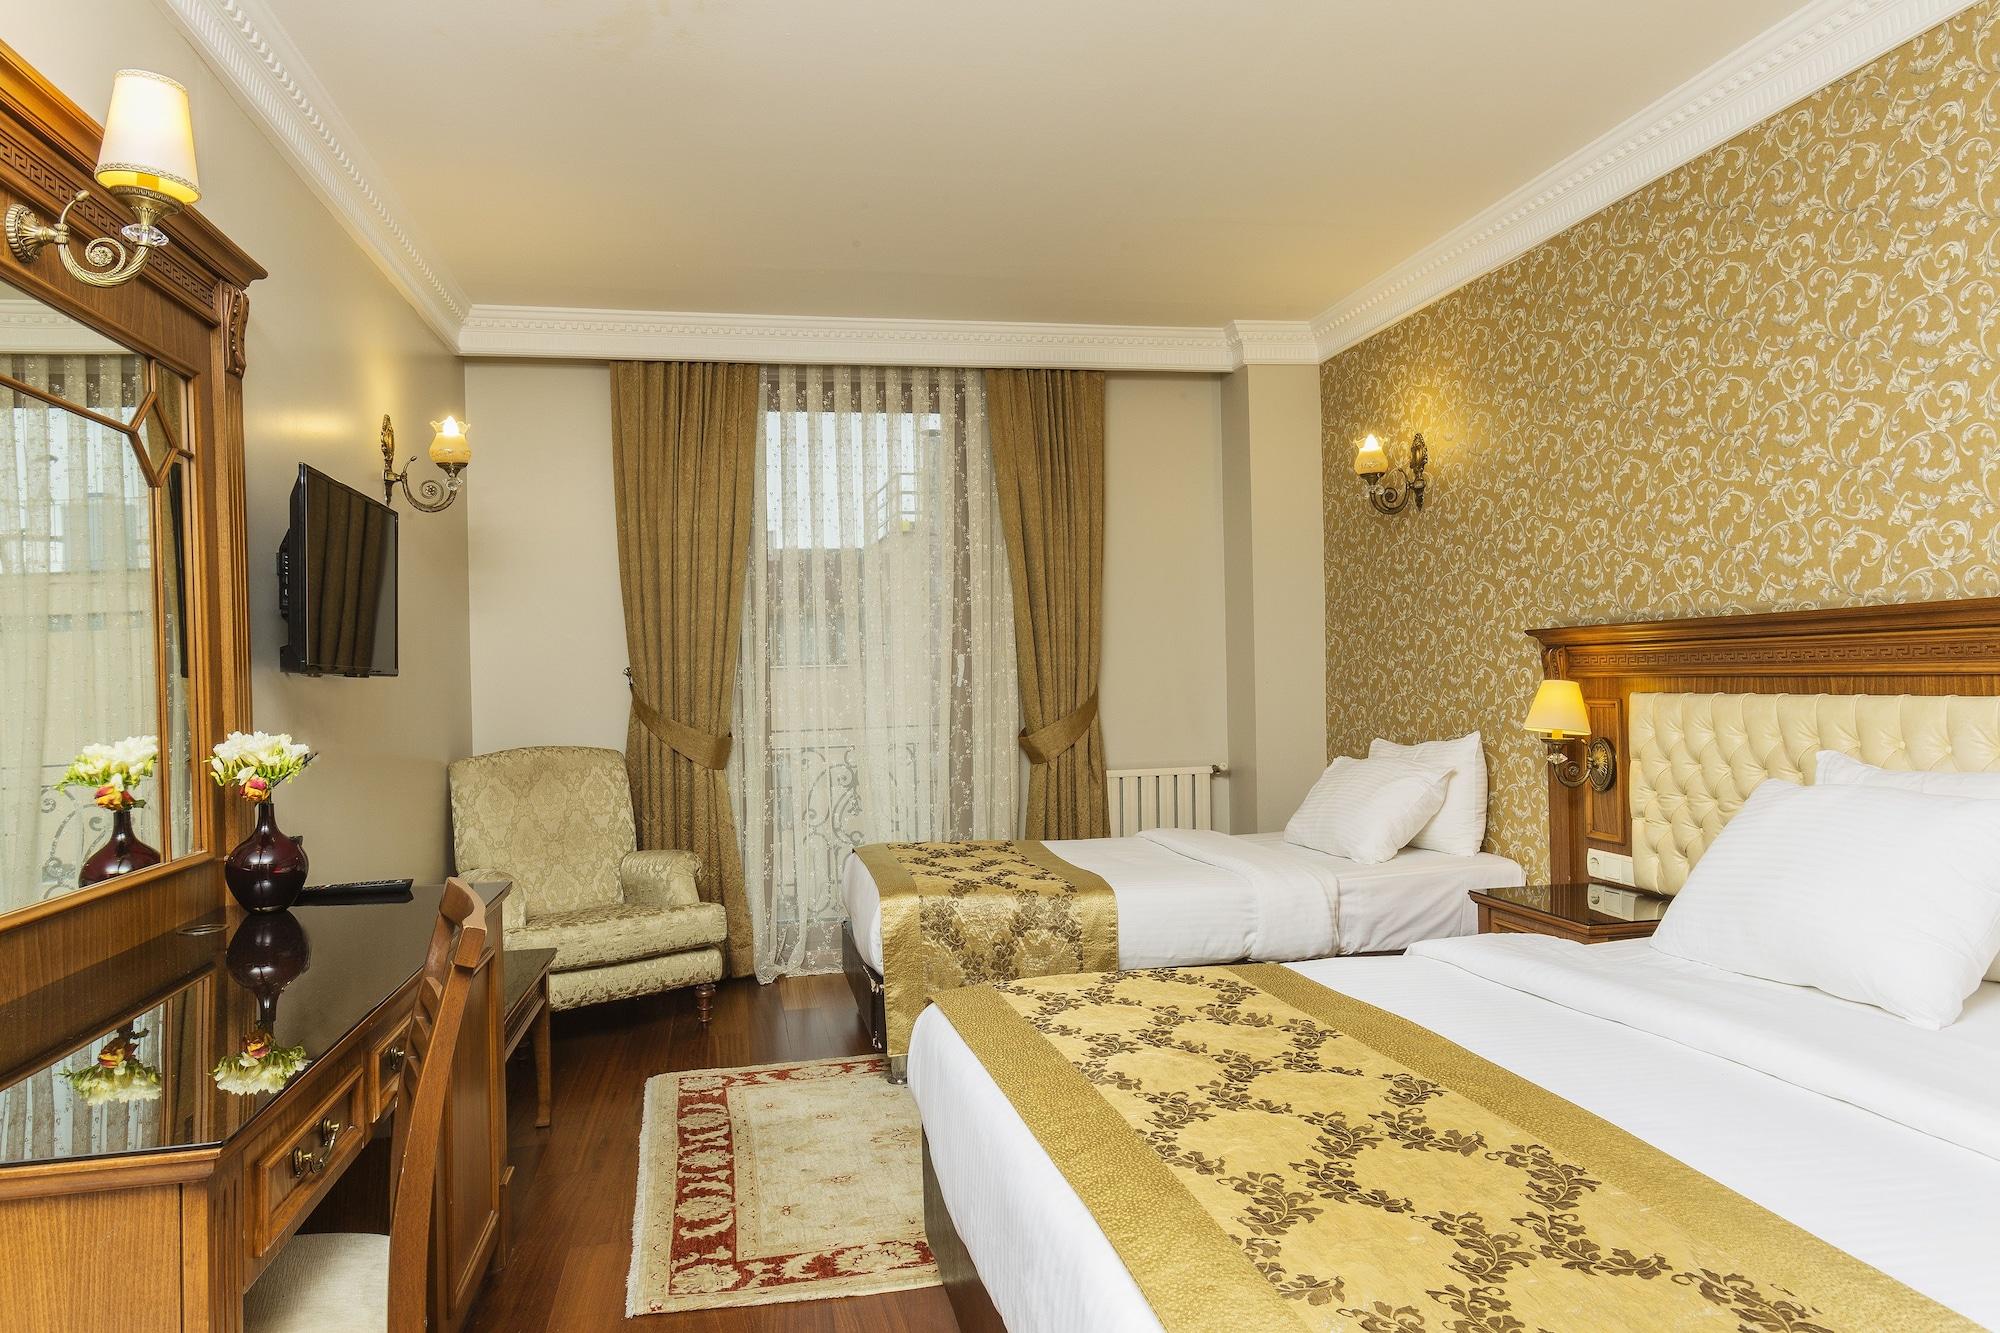 Acra Hotel Istanbul. Acra Hotel 4*. Стамбул (Фатих) / Istanbul (Fatih) my Dream Istanbul Hotel 4*. Стамбул (Фатих) / Istanbul (Fatih) Antik Ipek Hotel (Special class) 2*.